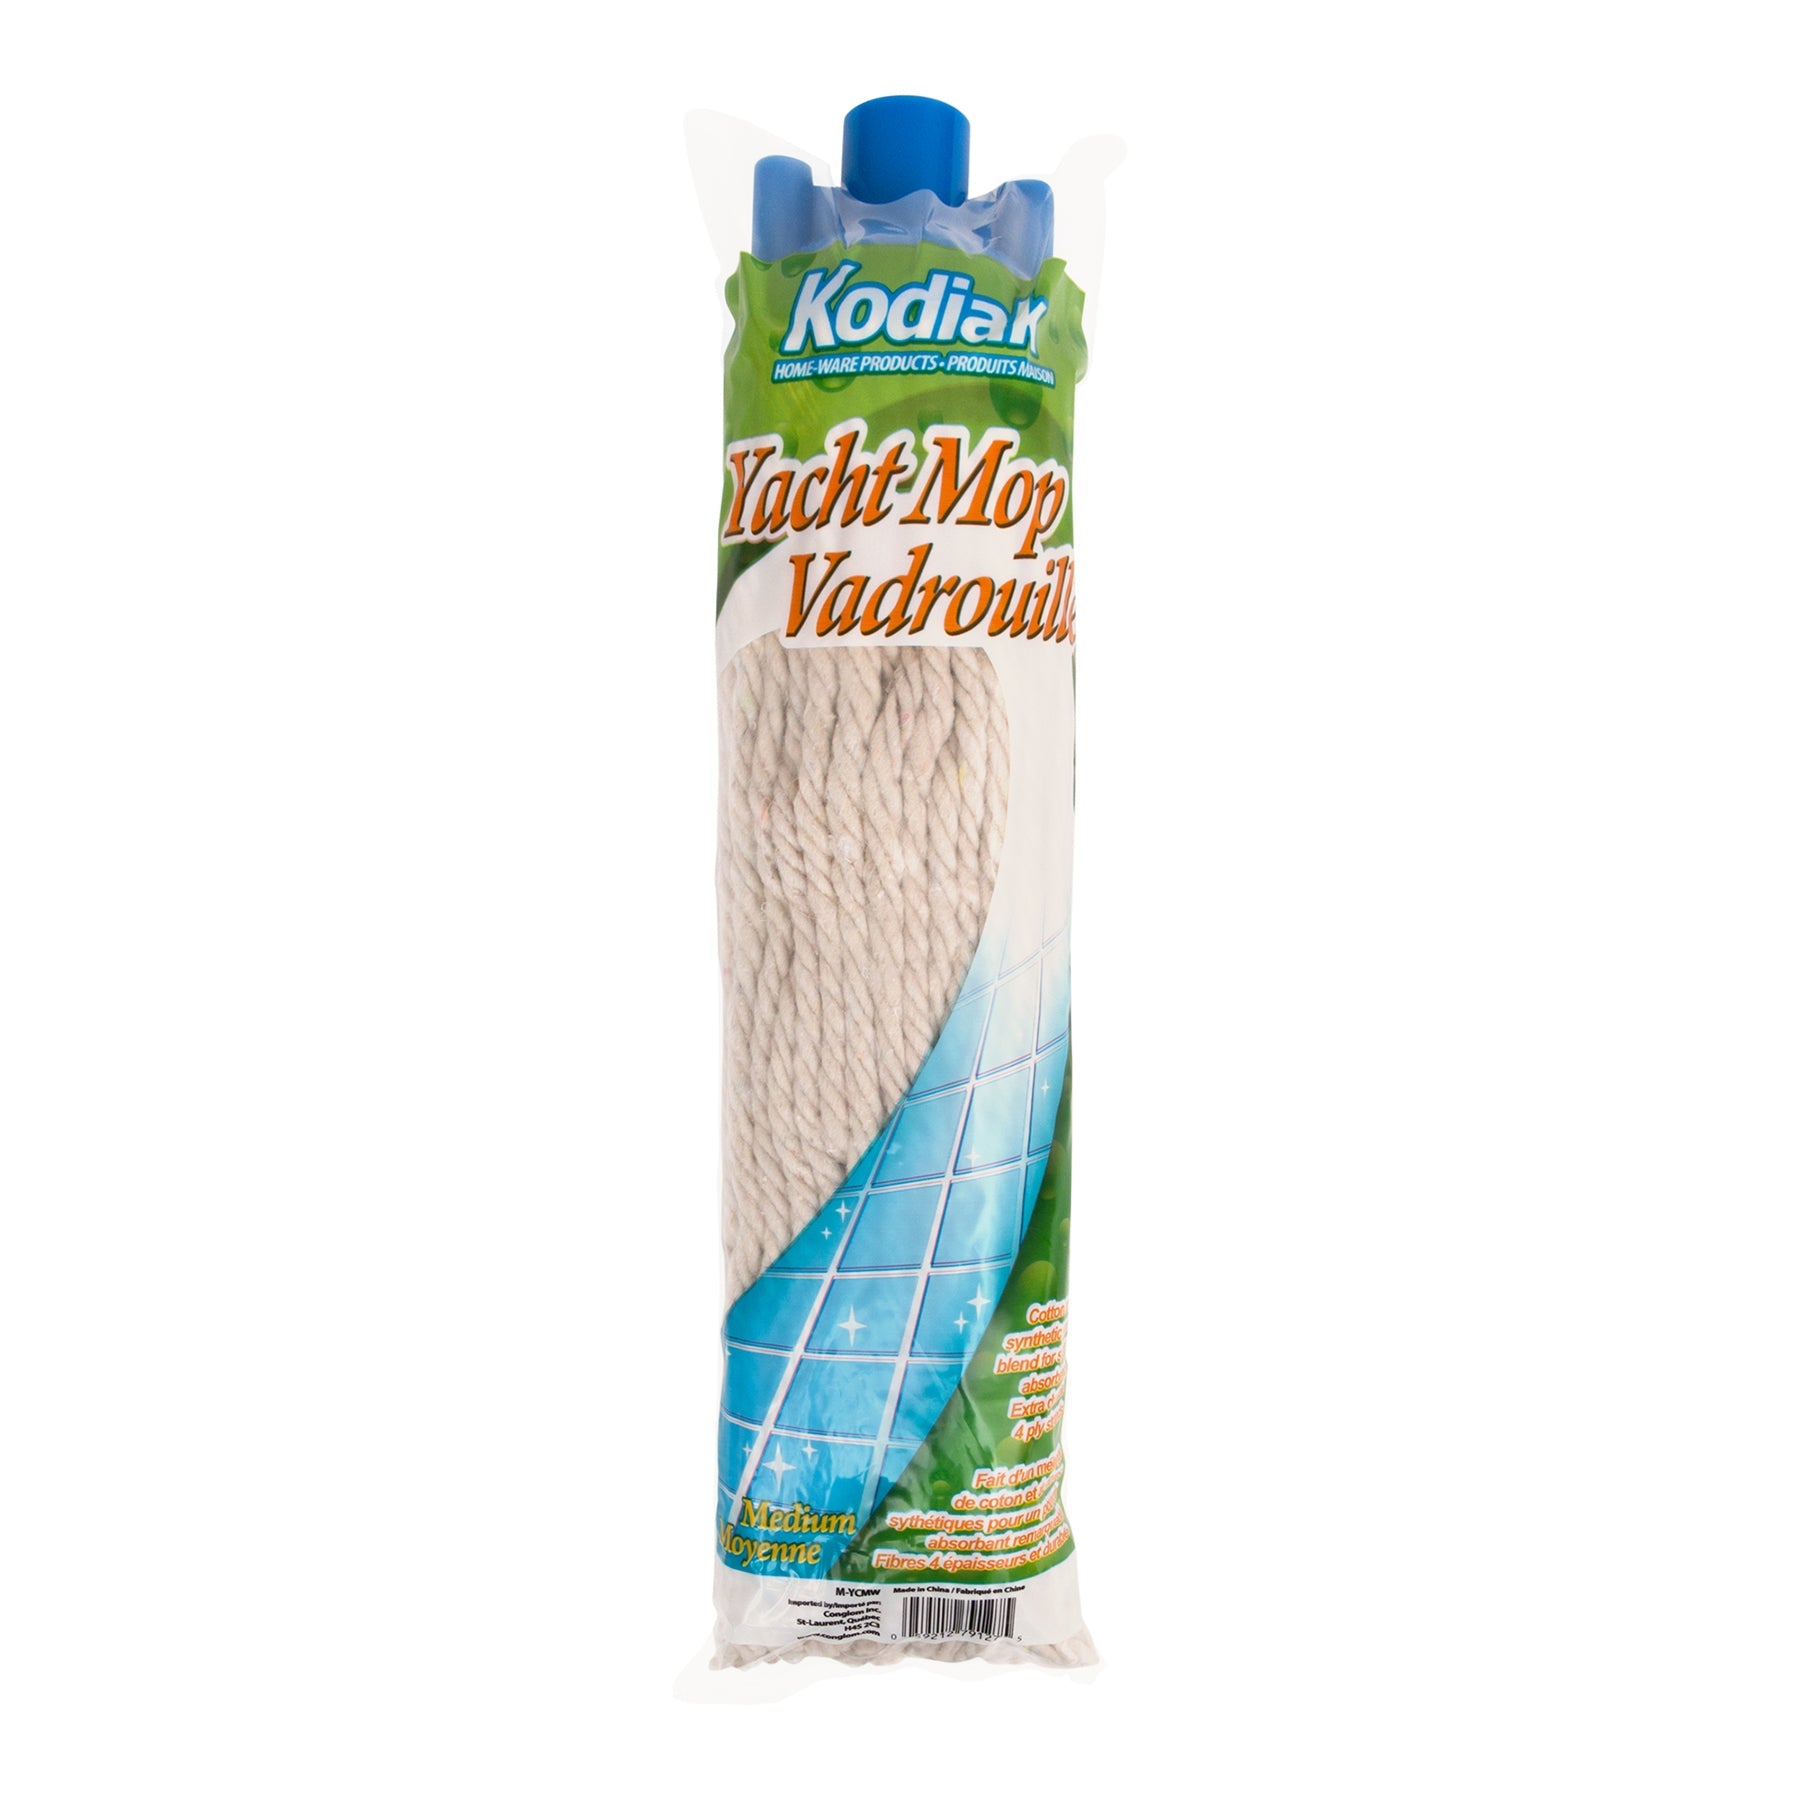 Kodiak Yatch Mop #12 White Cotton Medium 11in long 